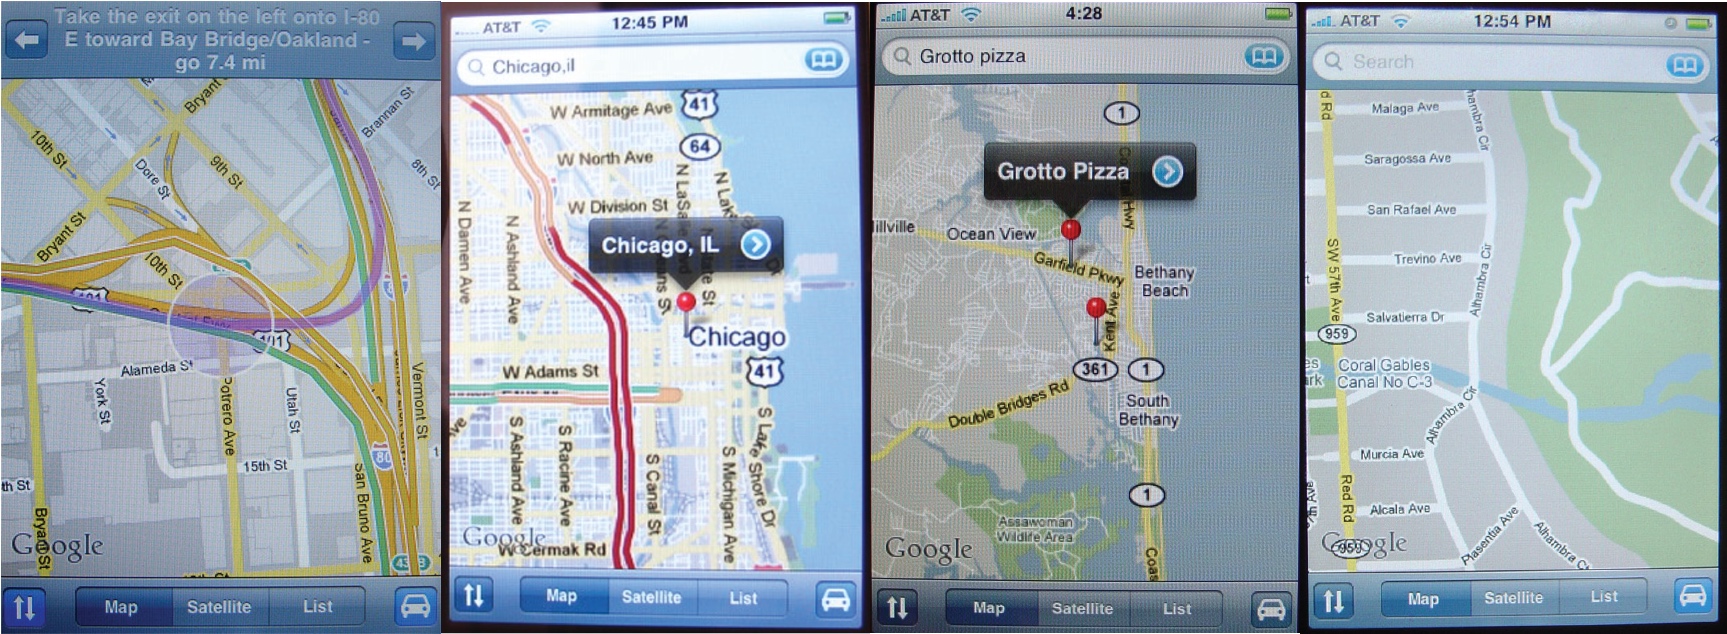 iPhone OS 1 Google Maps app (2007)